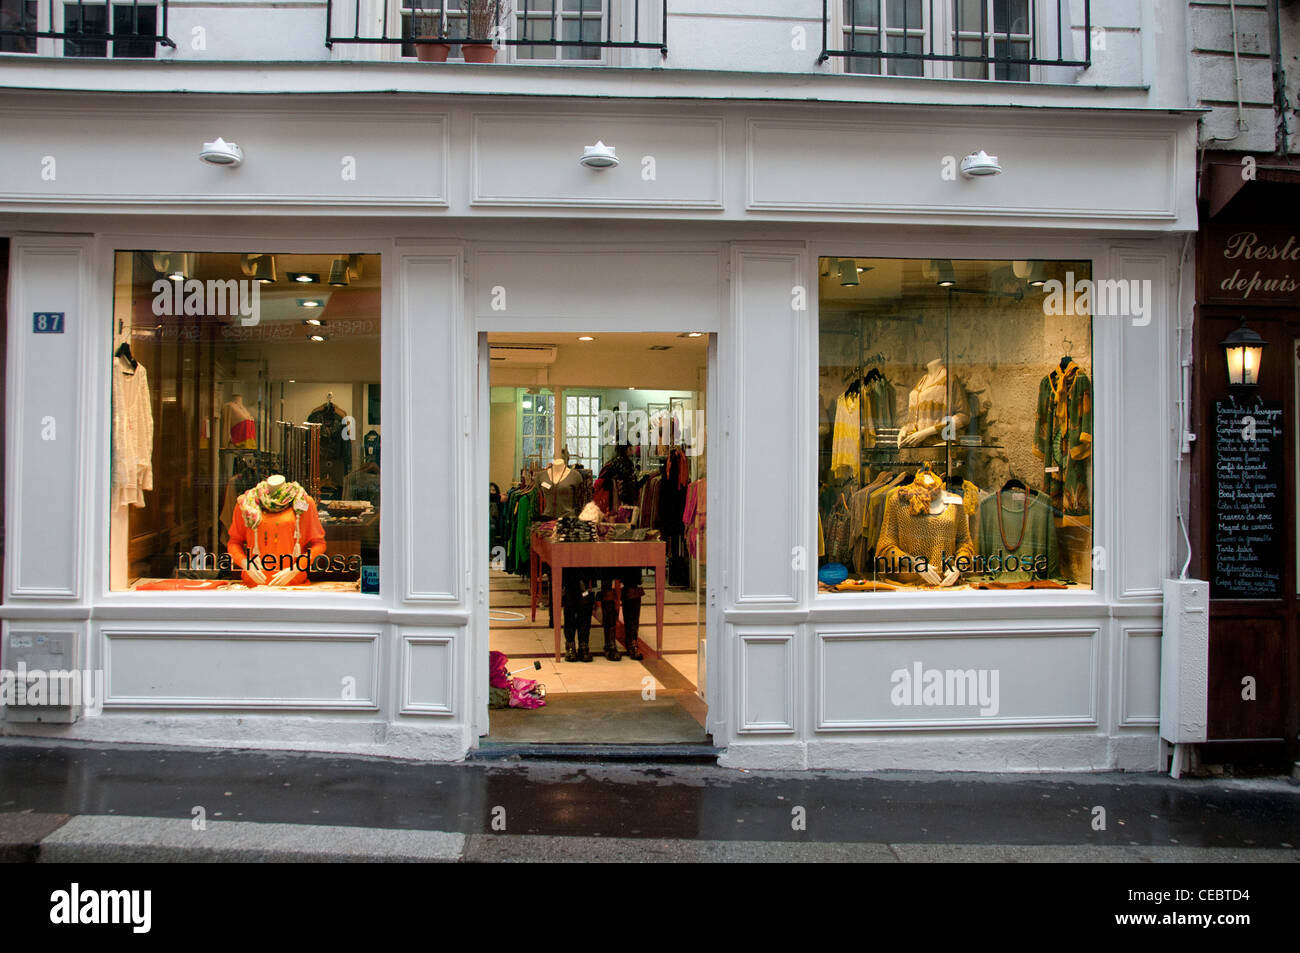 Nina Kendose Rue Mouffetard Francia Parigi modalità Fashion Shop Foto Stock